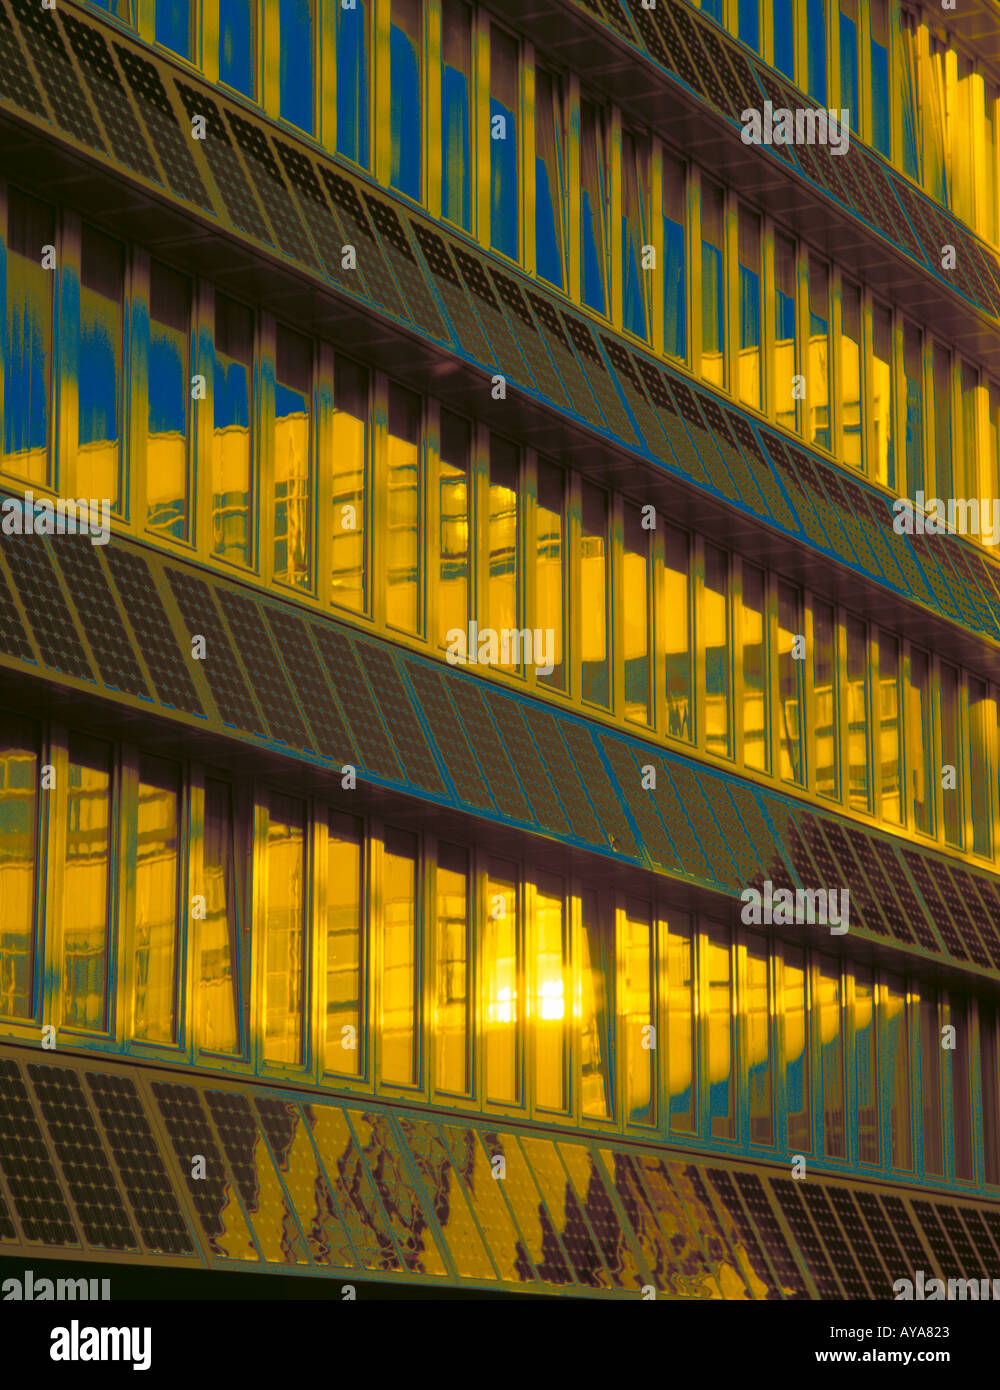 Les cellules photovoltaïques sur le "bâtiment", "Northumbria University of Northumbria', Newcastle upon Tyne, Tyne and Wear, England, UK. Banque D'Images